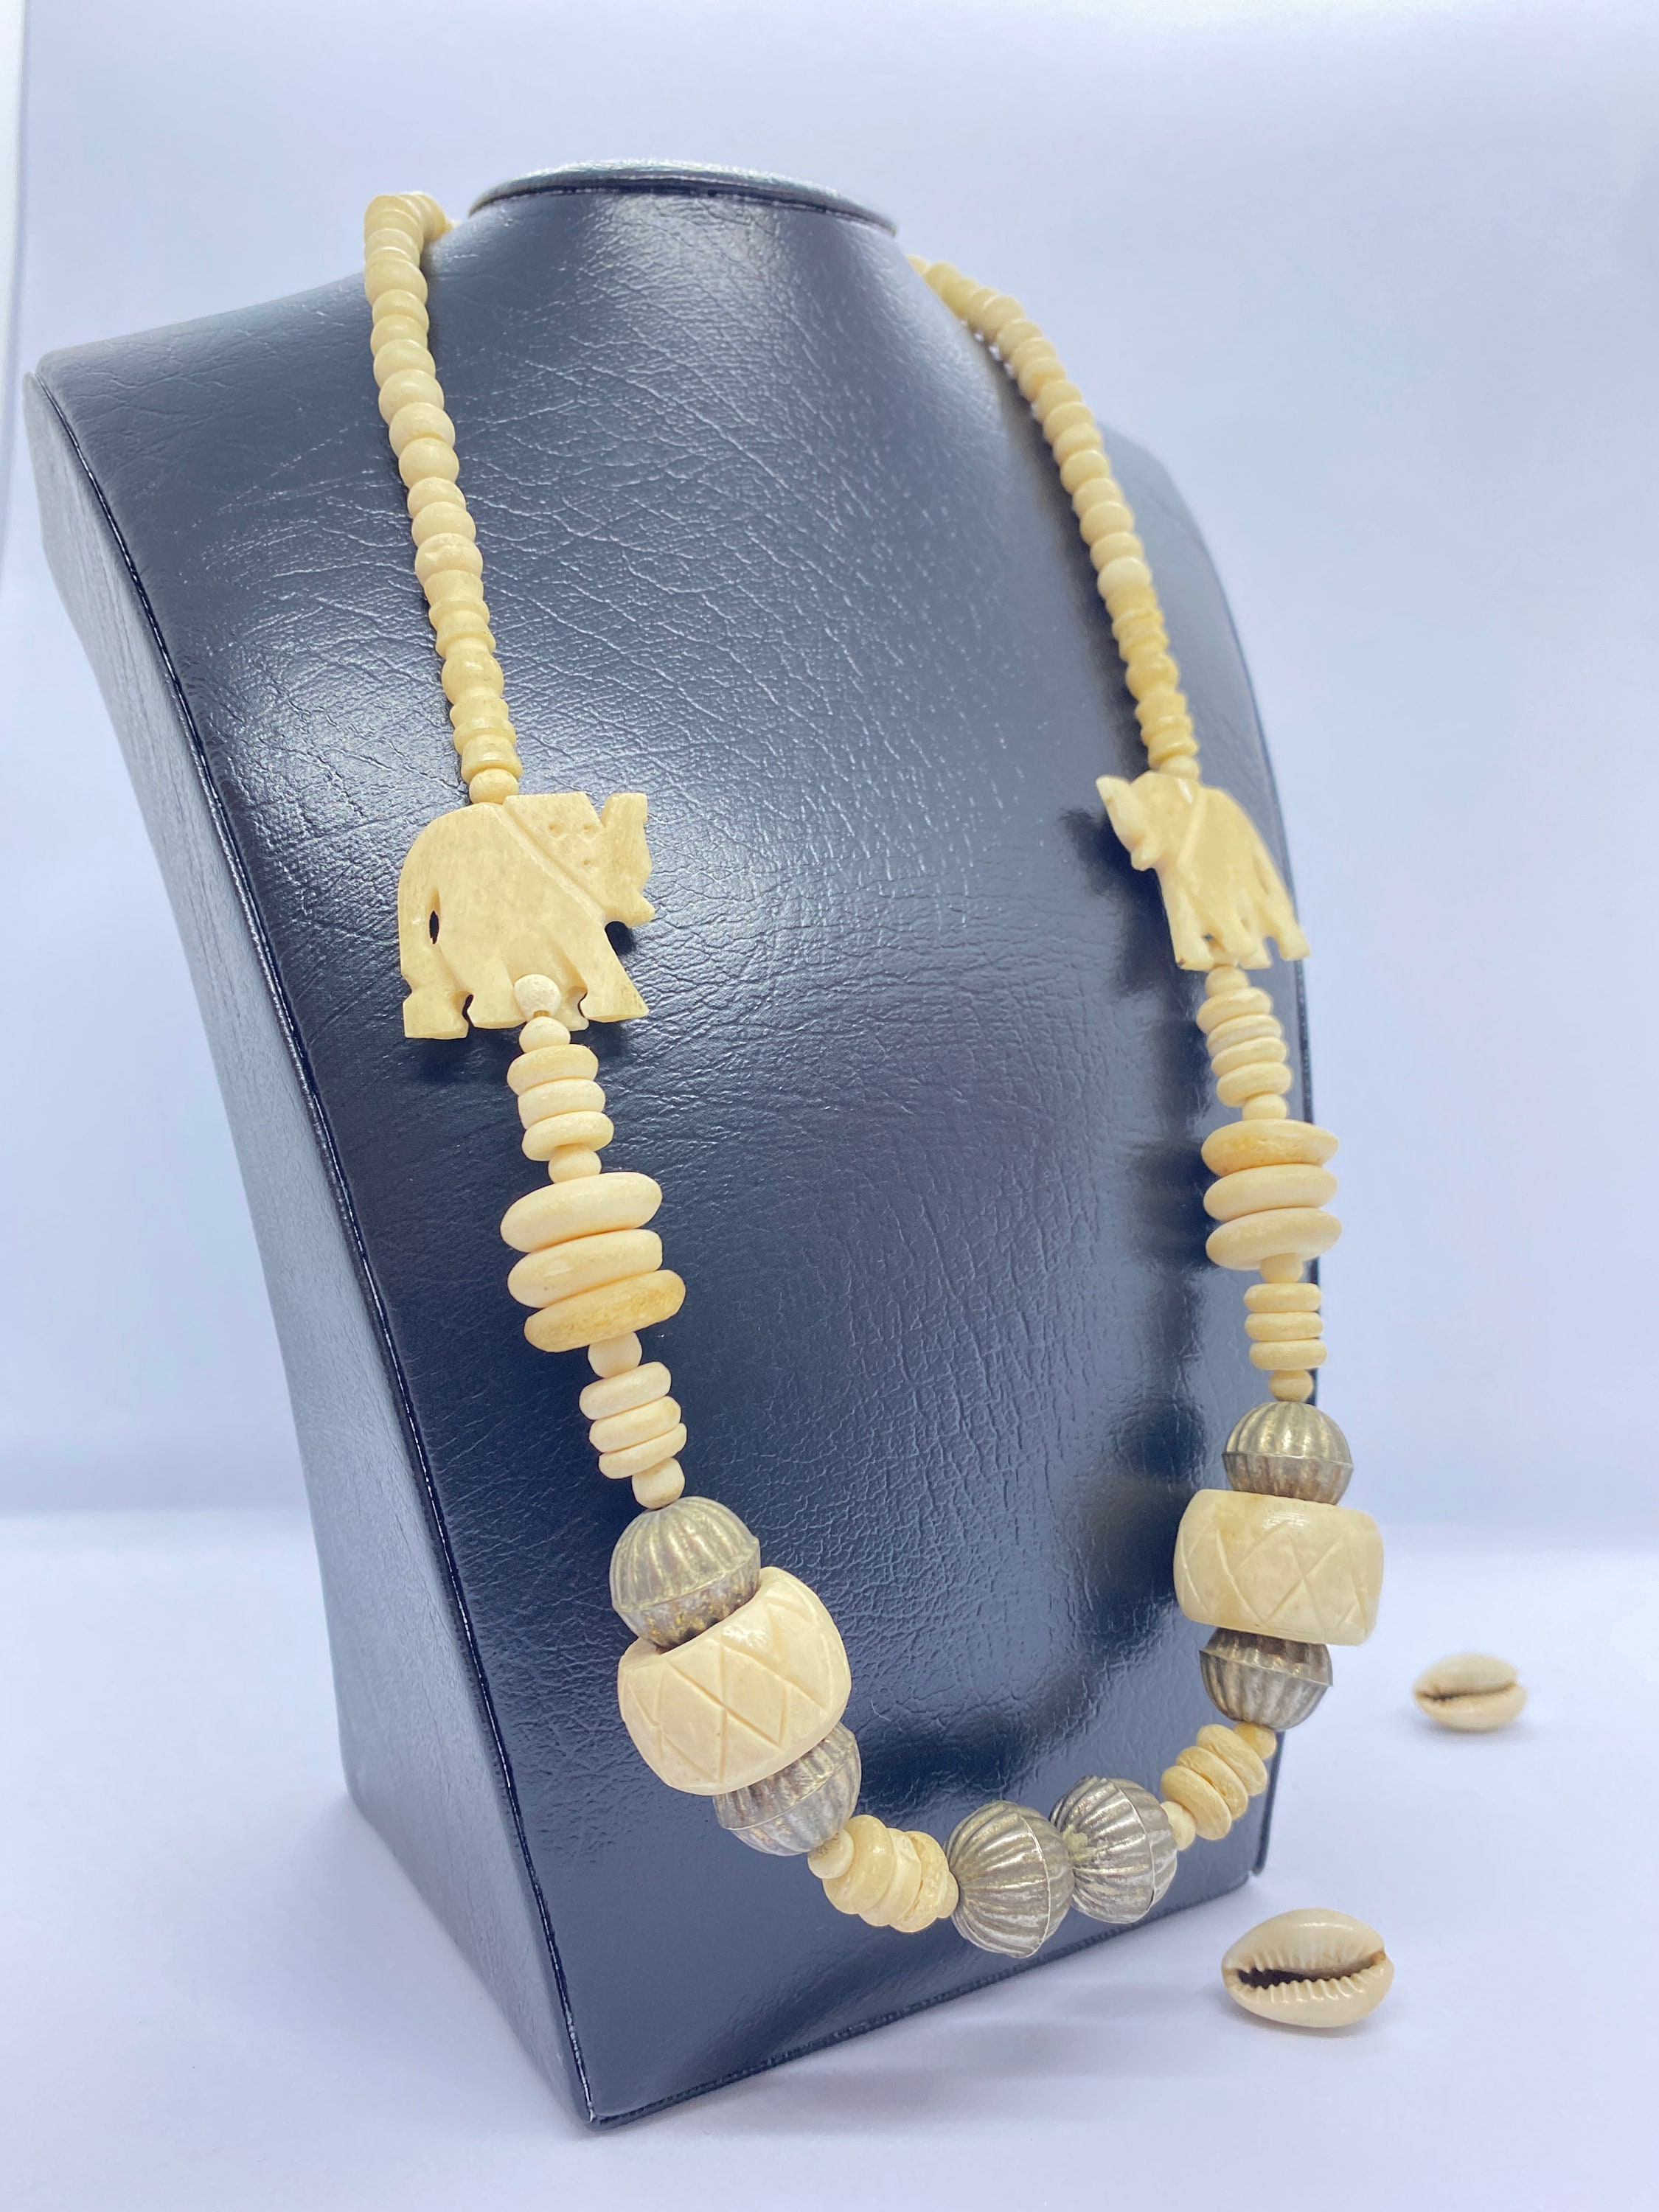 Ivory elephant tusk jewelry taken from traveler at Detroit Metro Airport